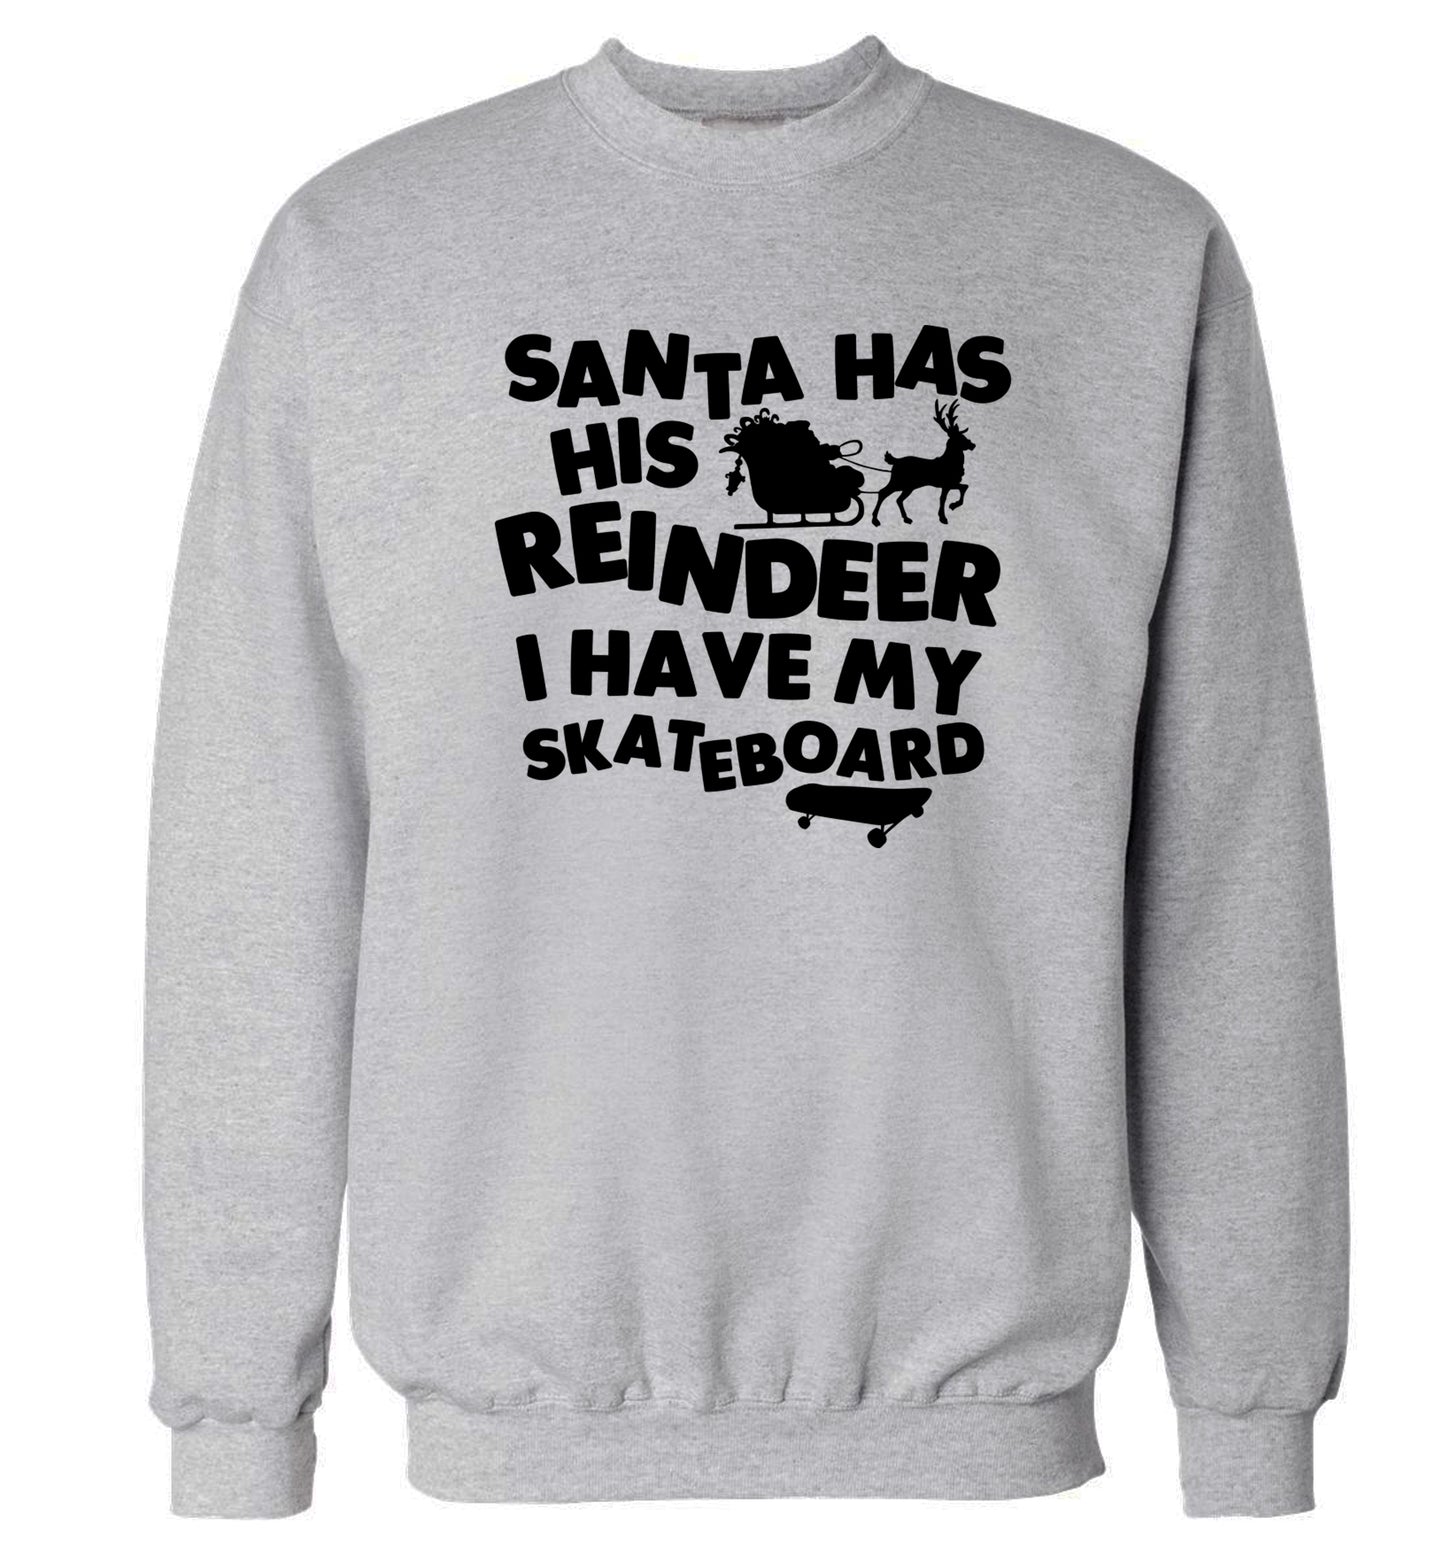 Santa has his reindeer I have my skateboard Adult's unisex grey Sweater 2XL